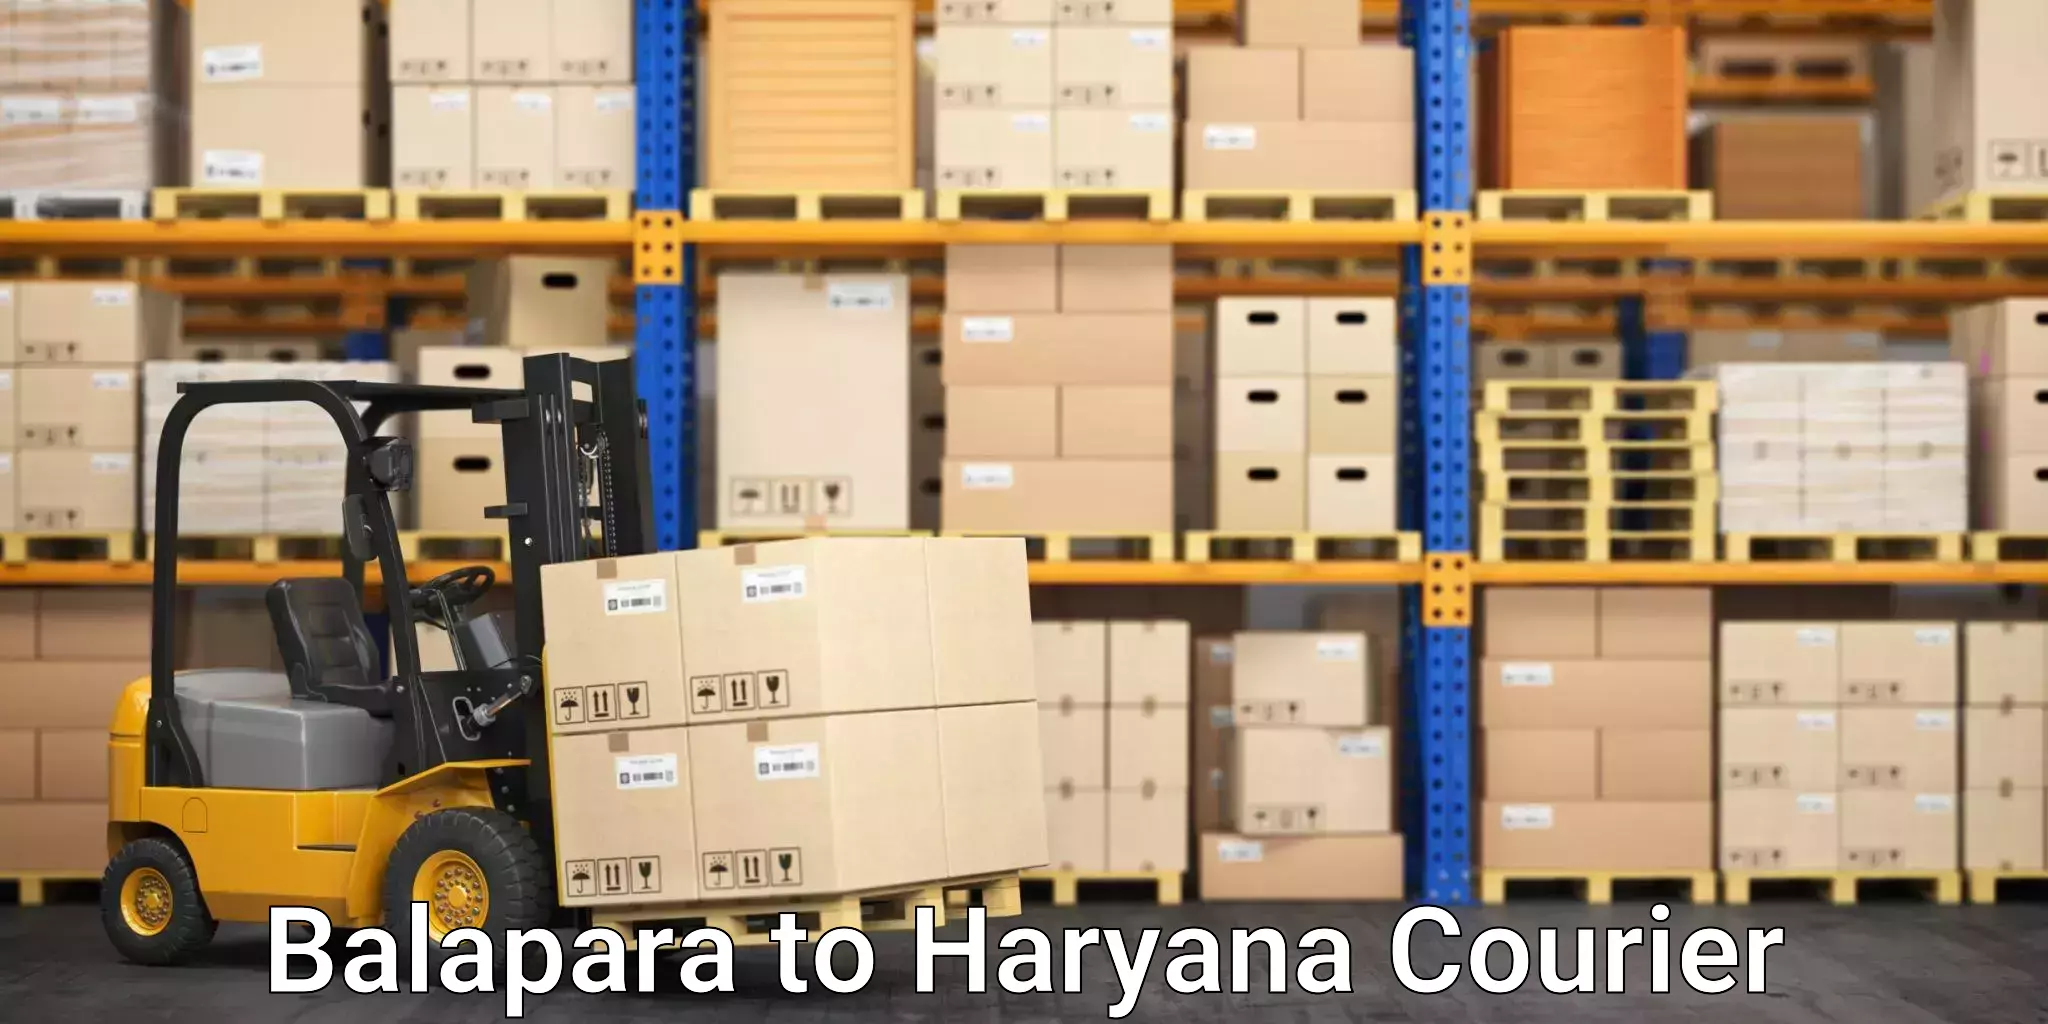 Reliable shipping partners Balapara to NCR Haryana